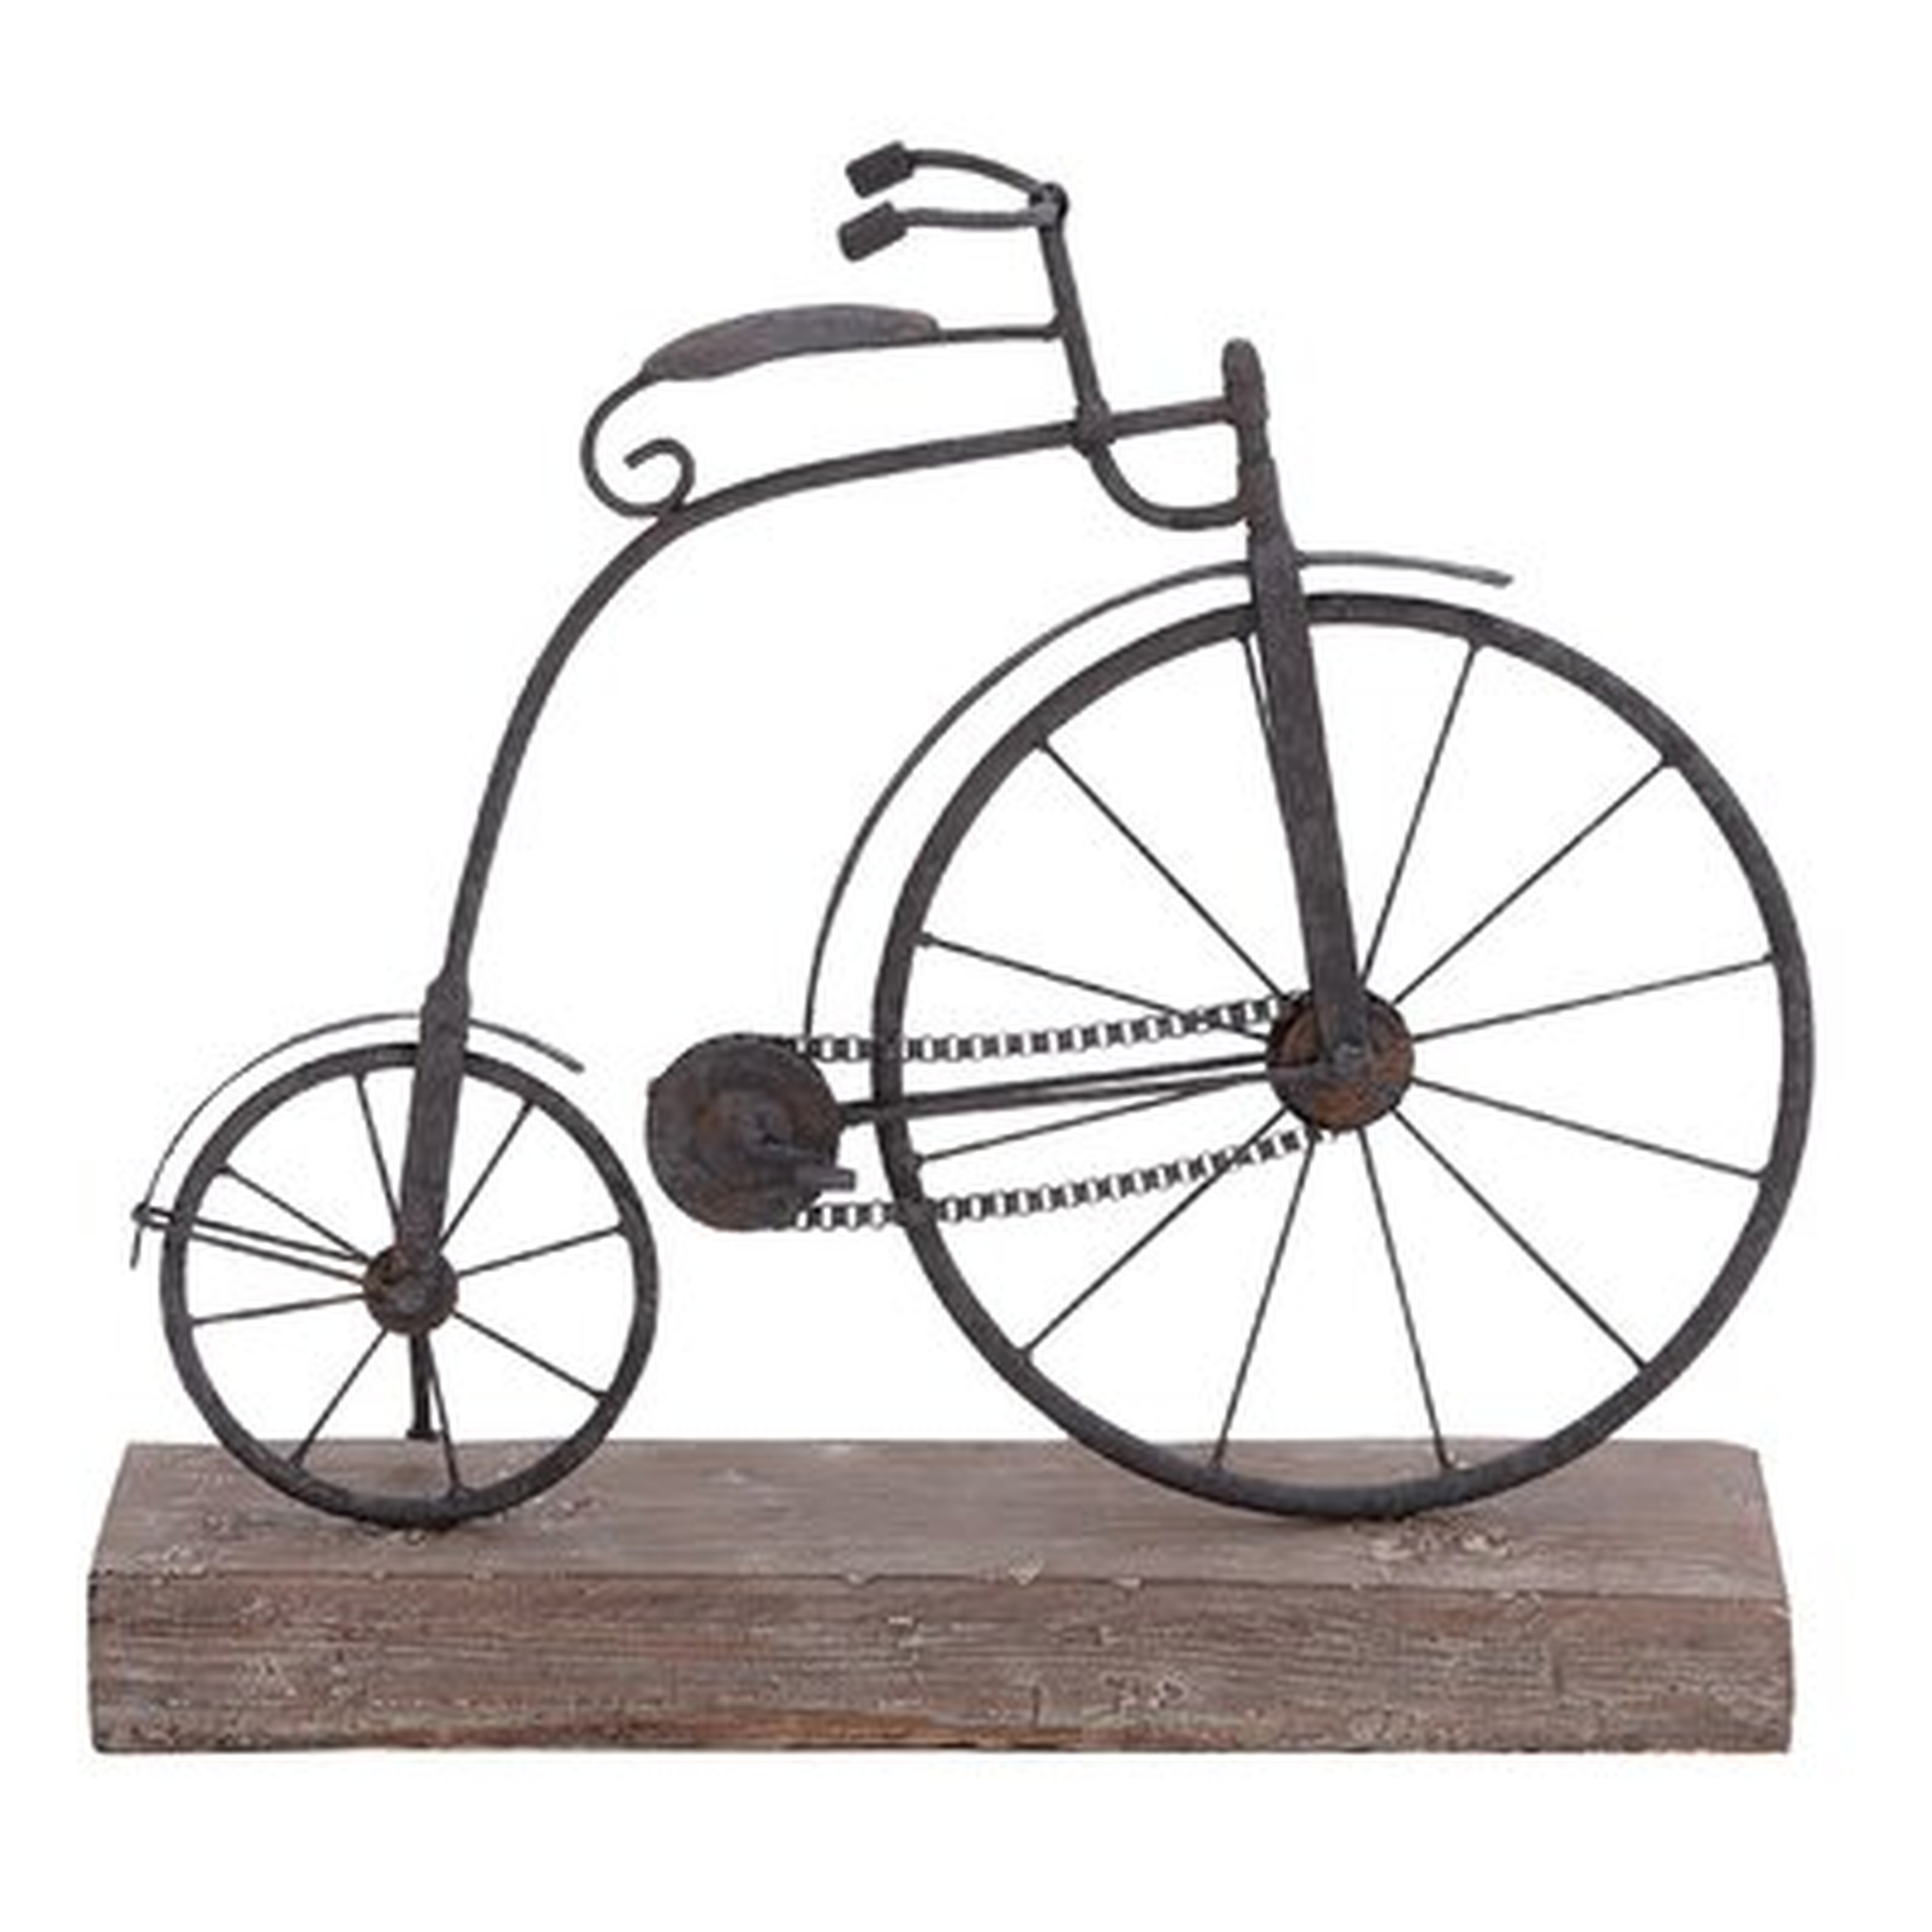 Textured Iron and Fir Decorative Bicycle Sculpture - Birch Lane